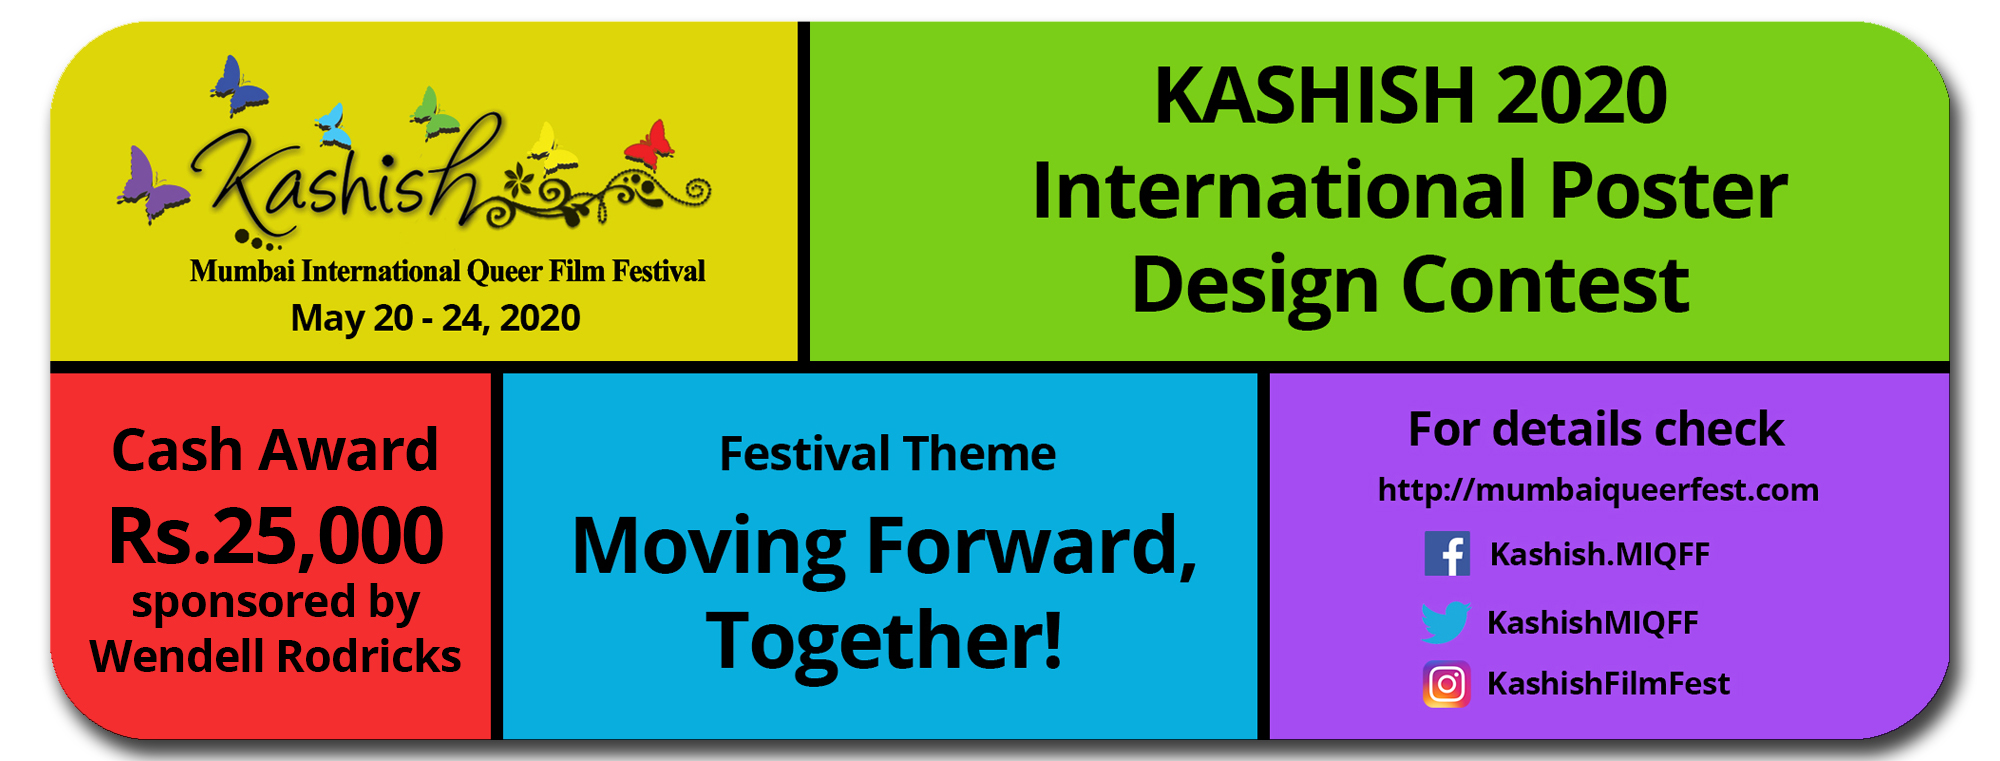 KASHISH2020-Cover-pic1